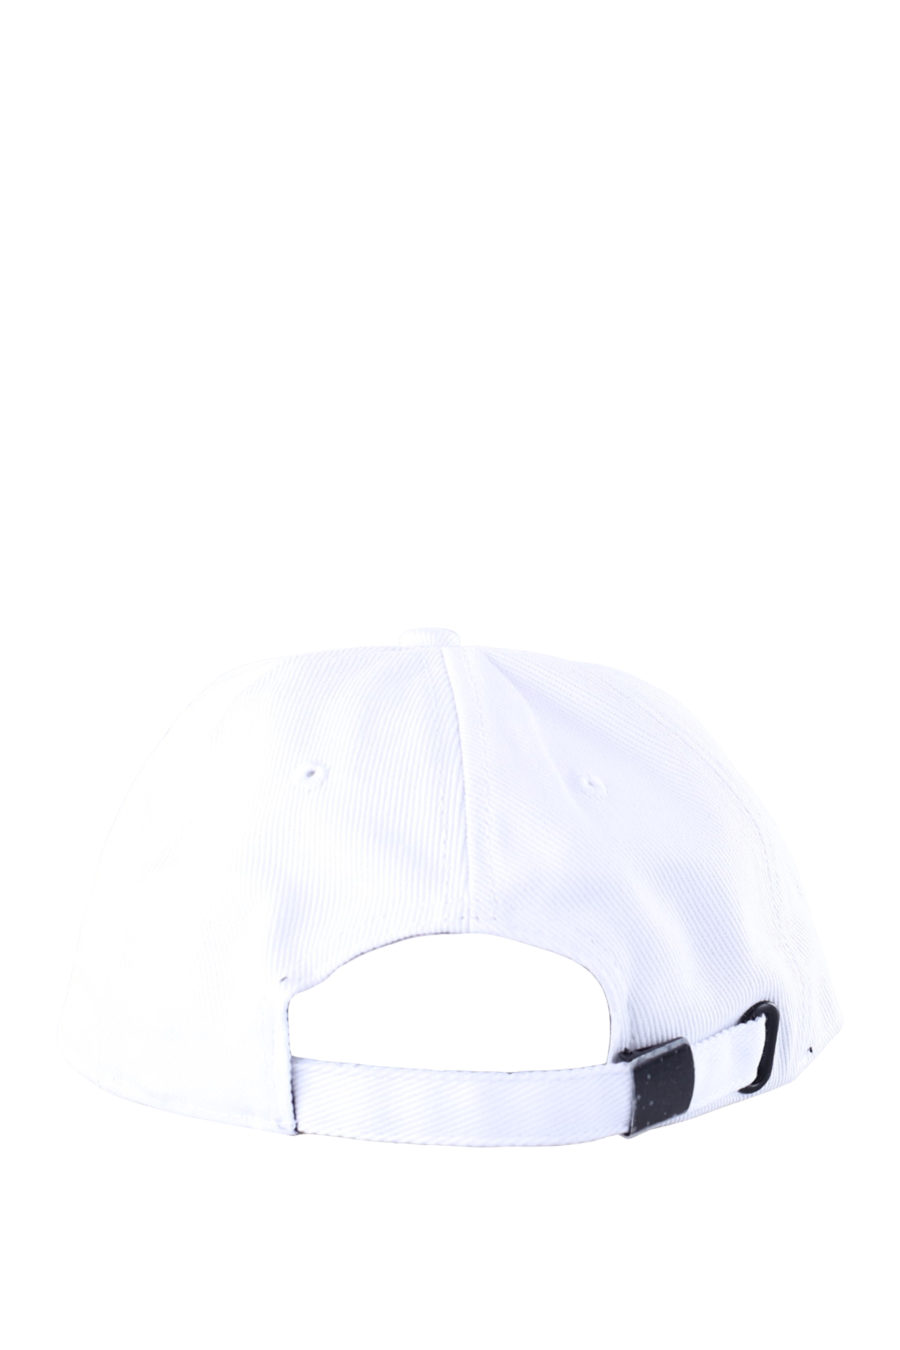 Gorra blanca con logotipo bordado - f936d7865941942b1716bc7982ad777a930a5bcc